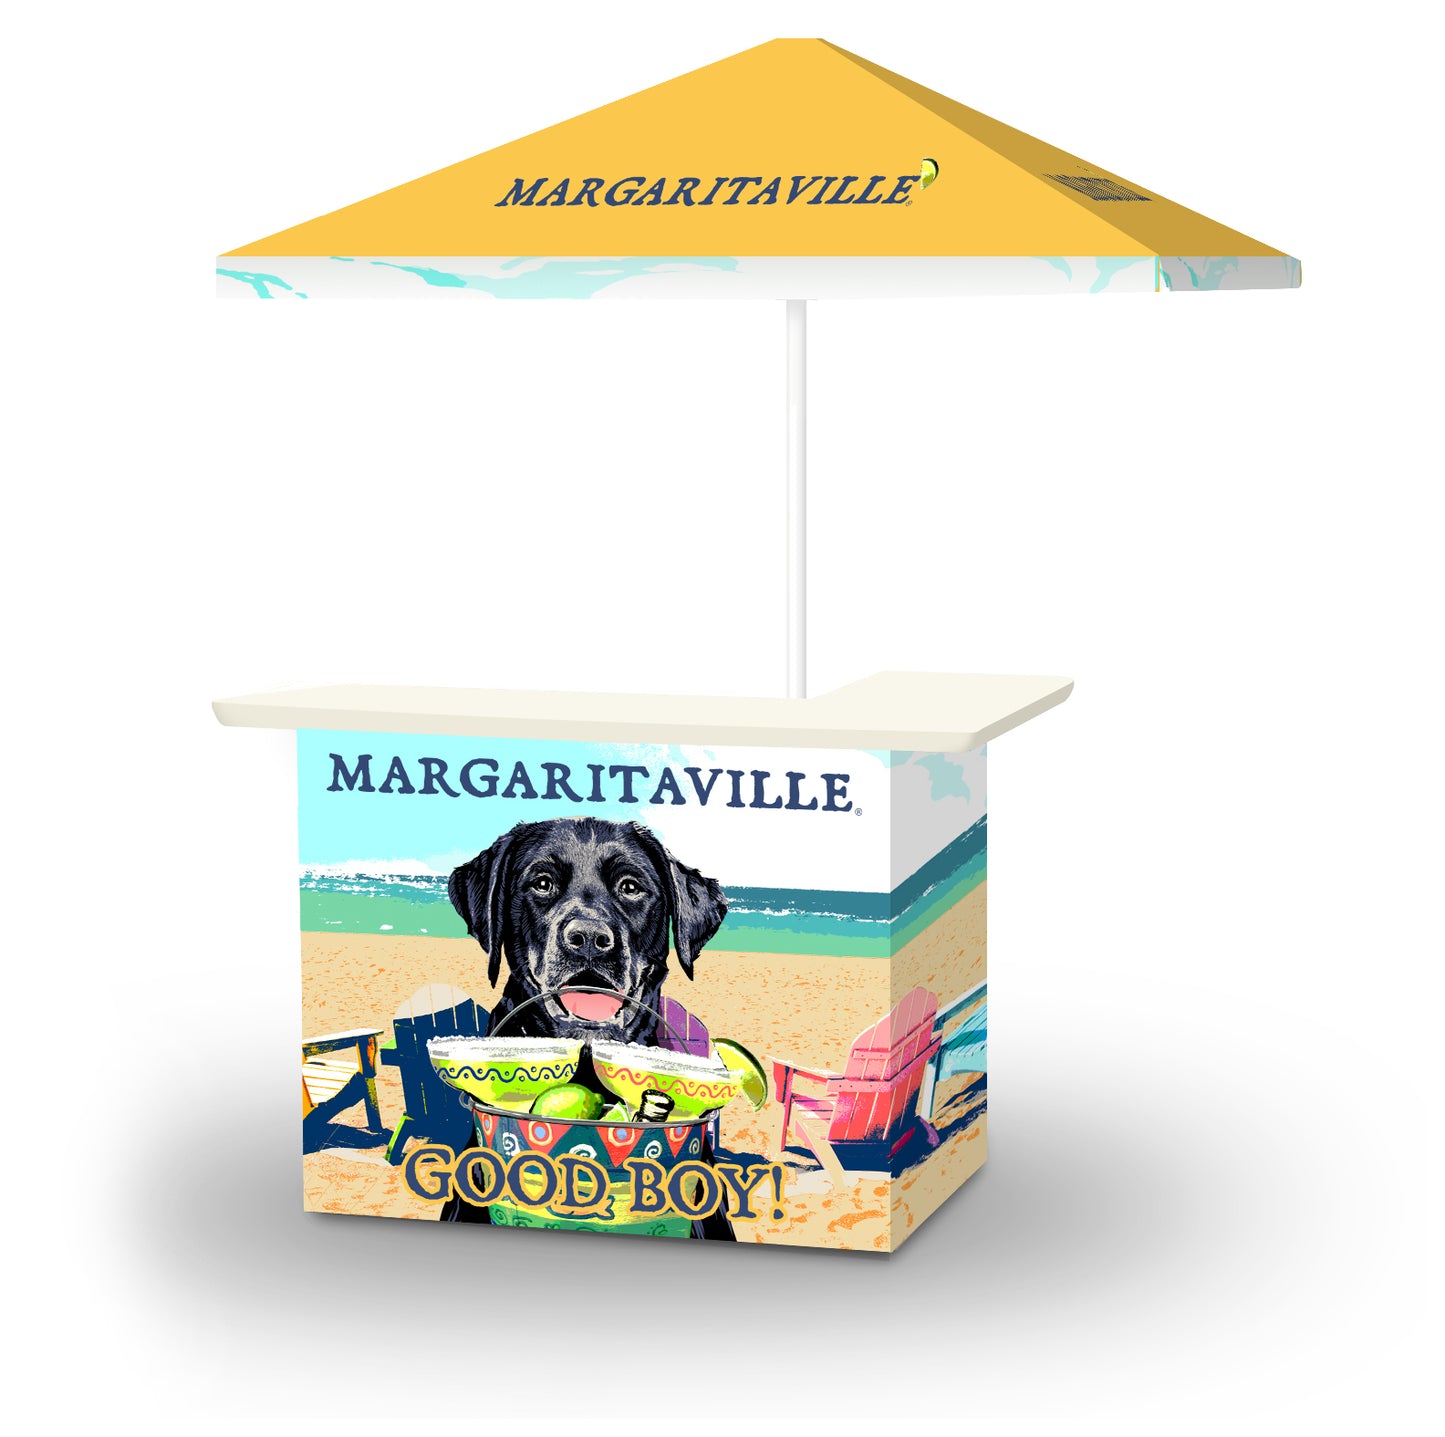 Margaritaville - Good Boy